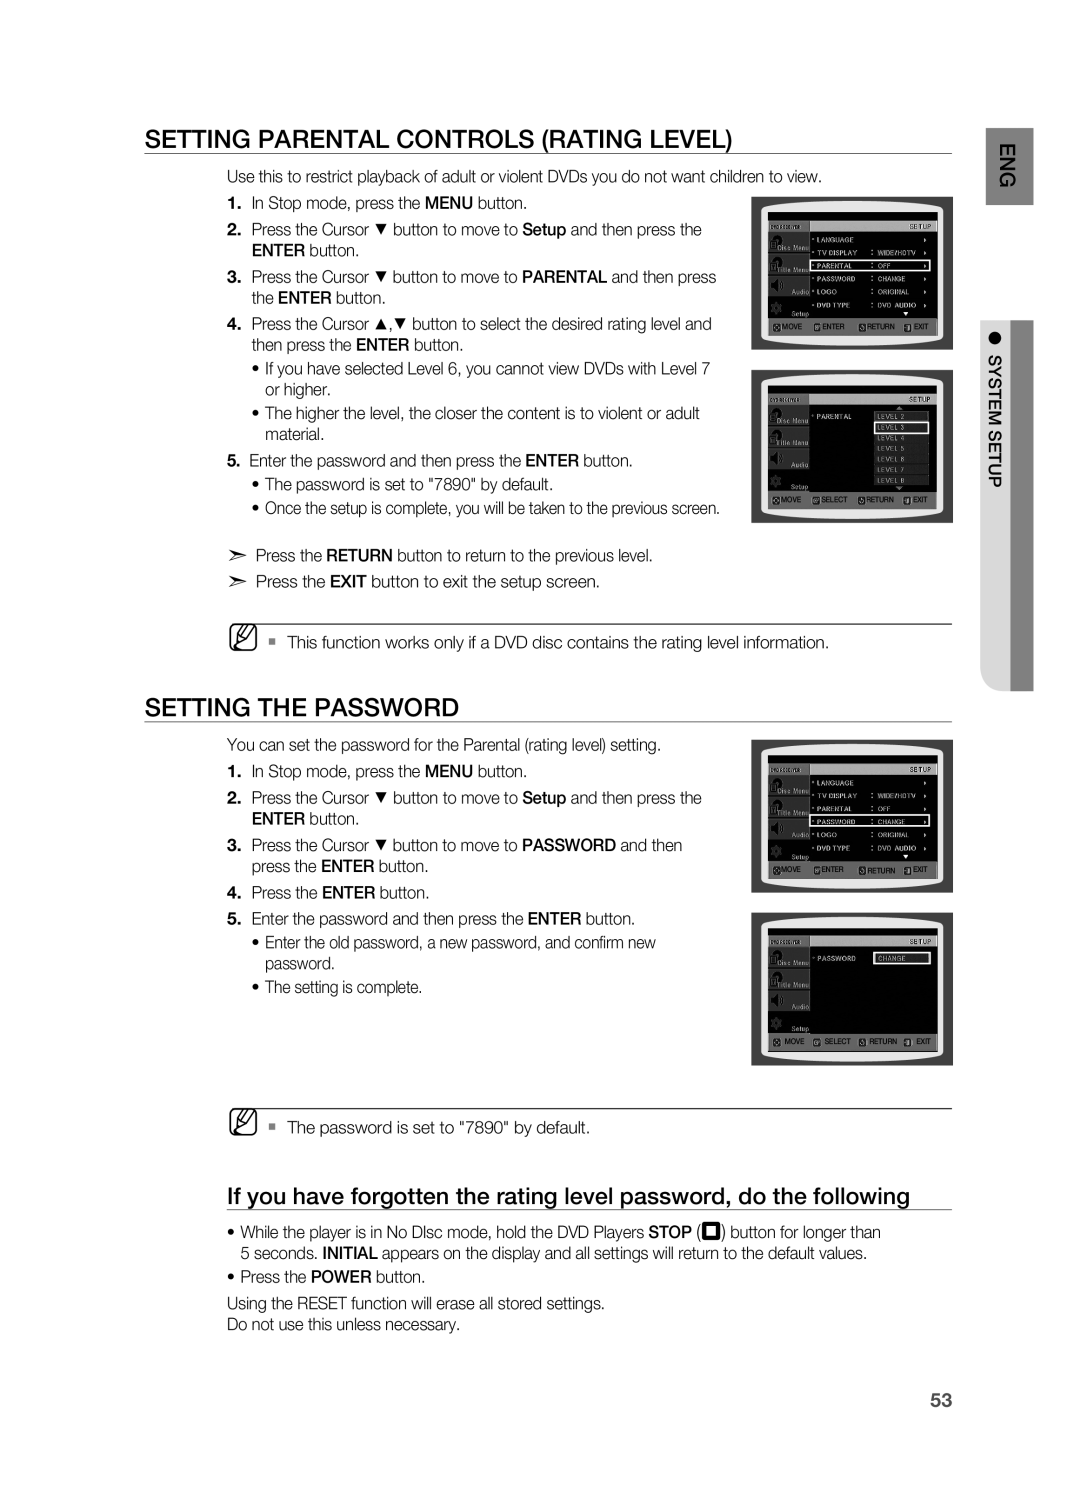 Samsung AH68-02055S manual Setting Parental Controls Rating Level, Setting the Password 